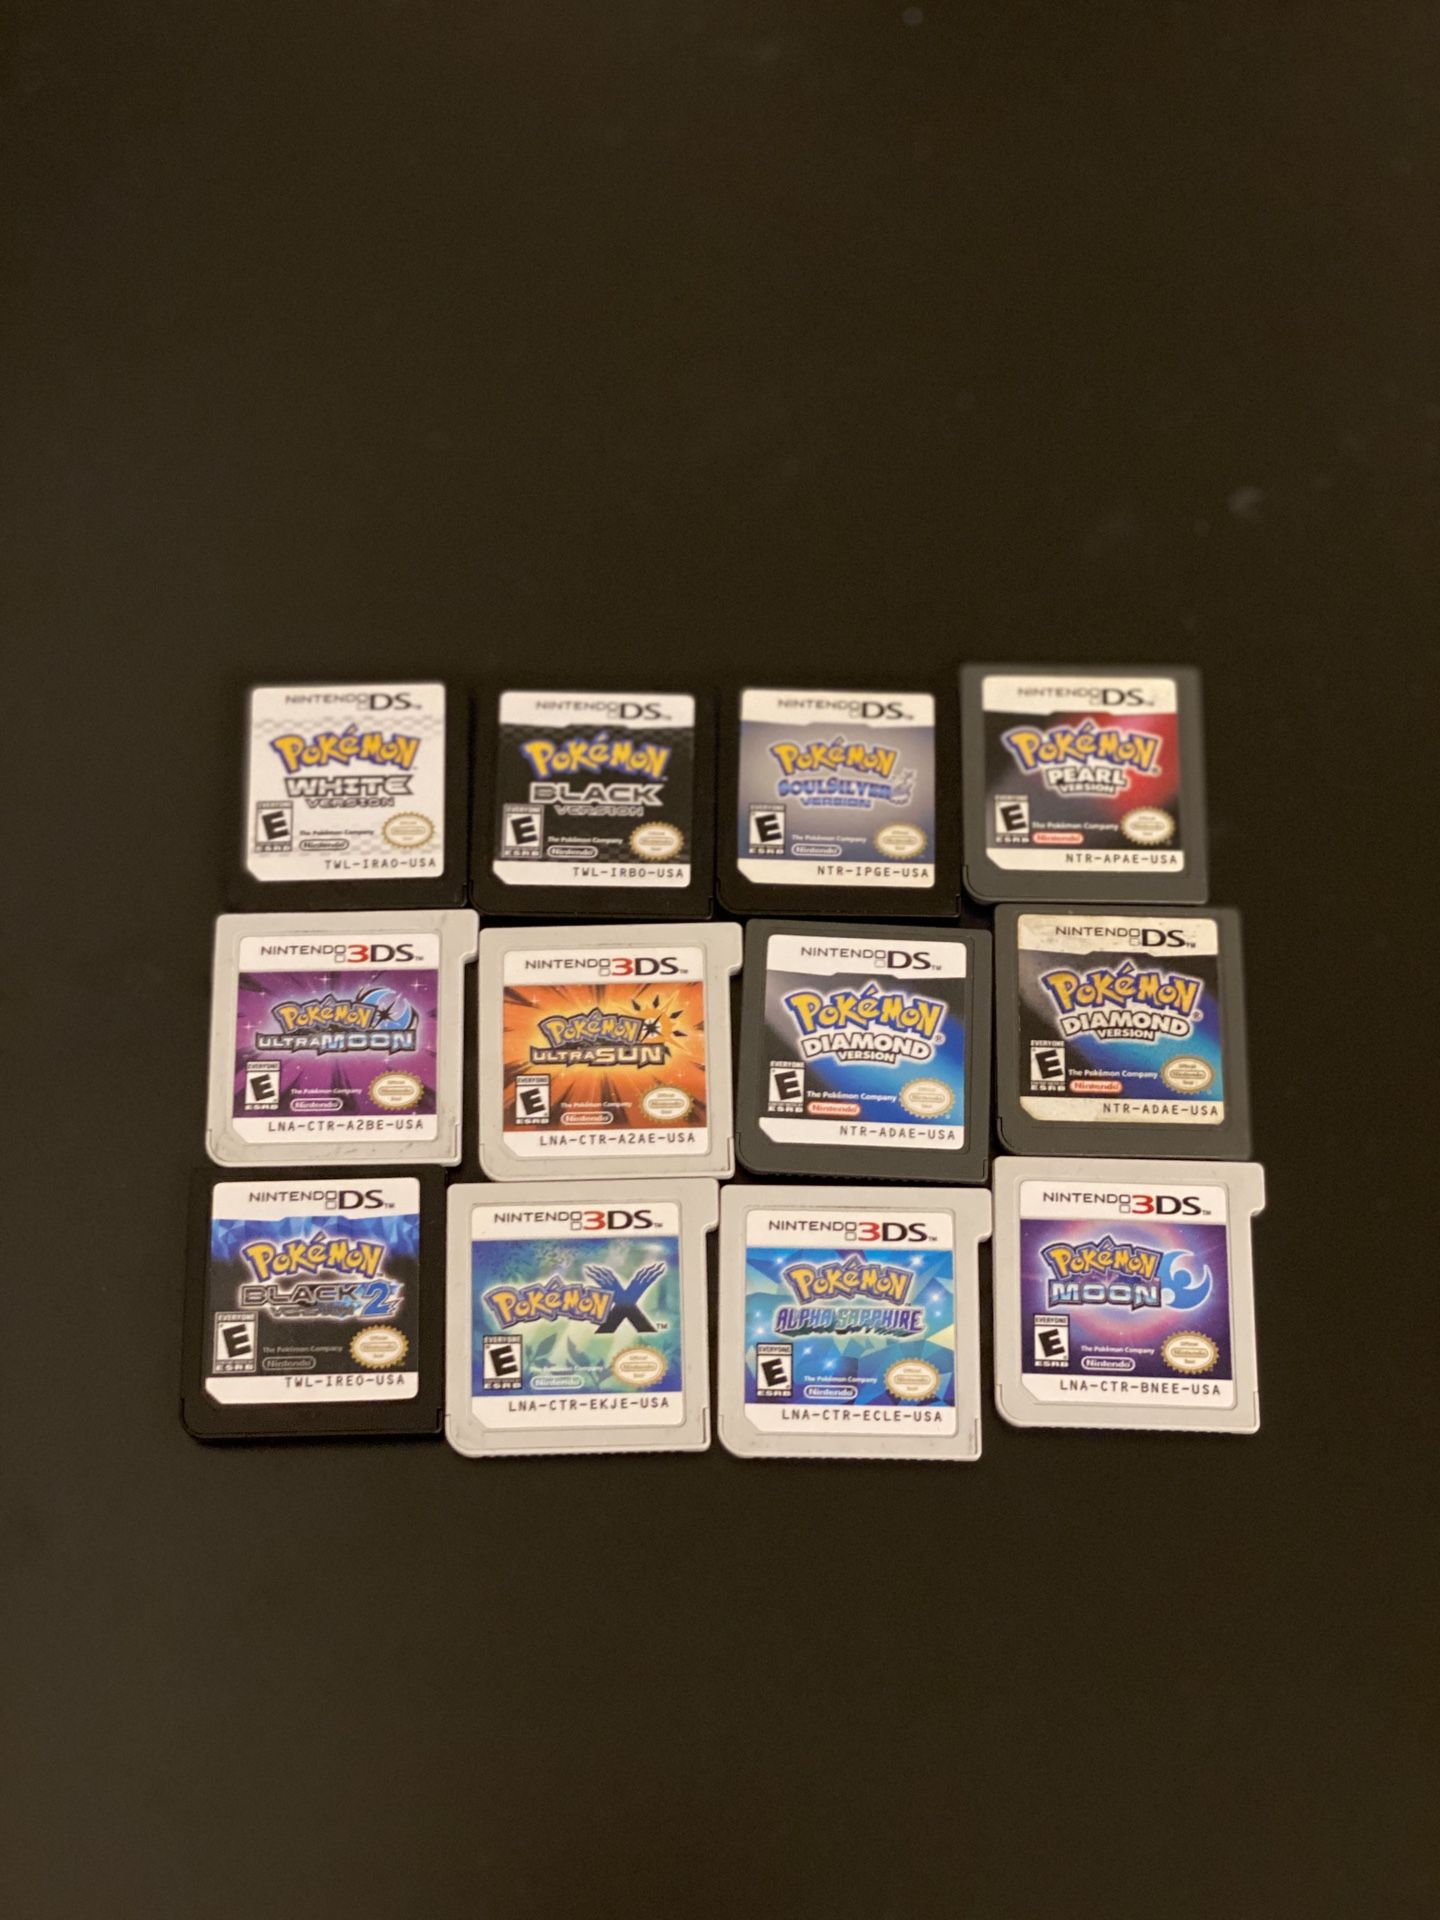 Lot of Pokémon games